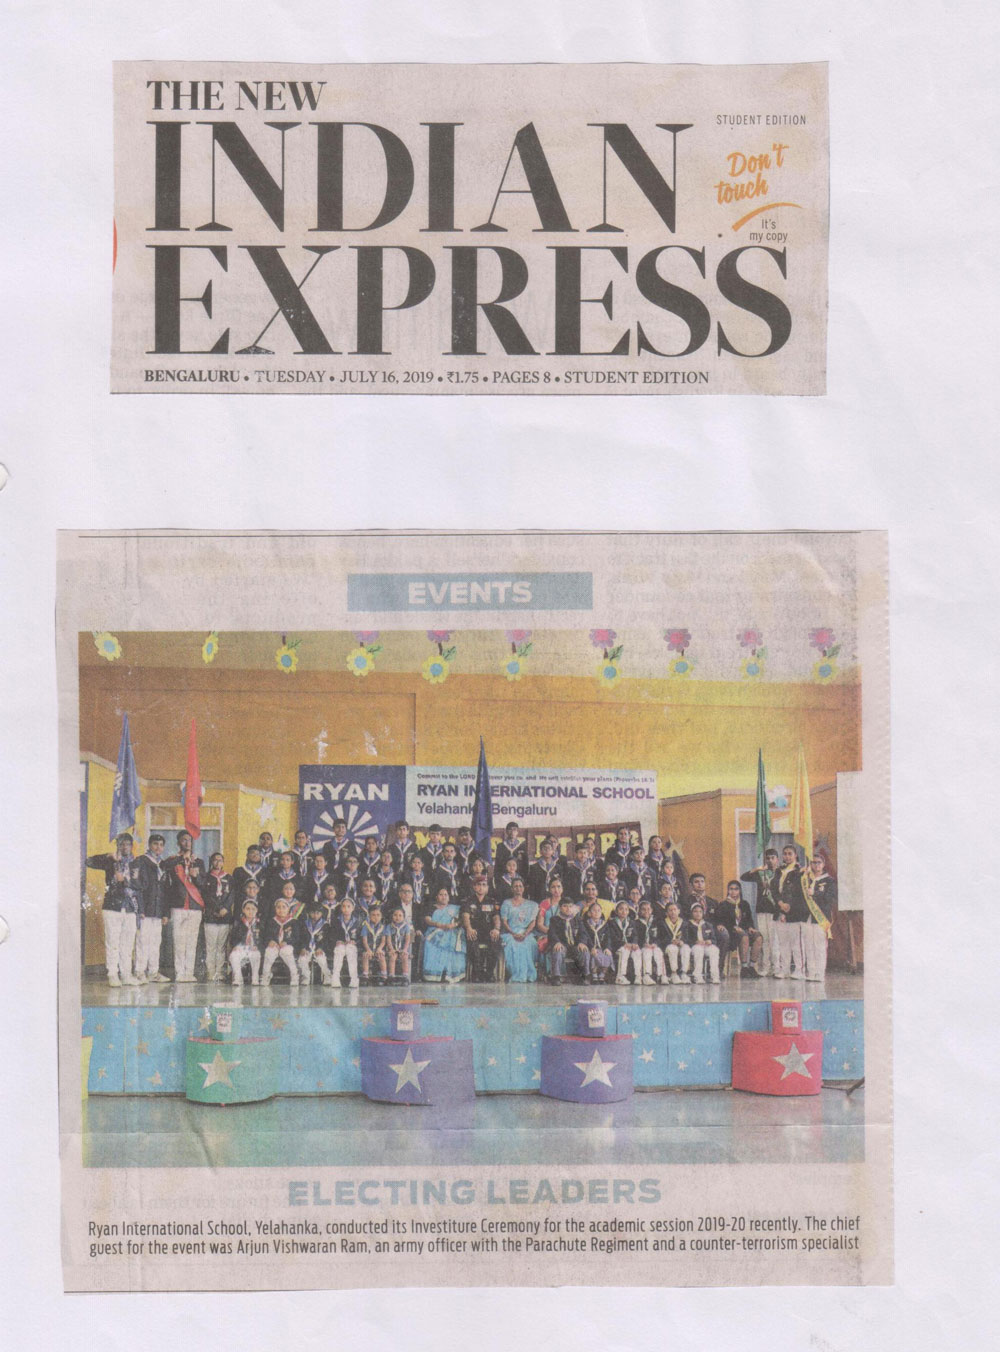 Electing Leaders’ - The New Indian Express - Ryan International School, Yelahanka - Ryan Group